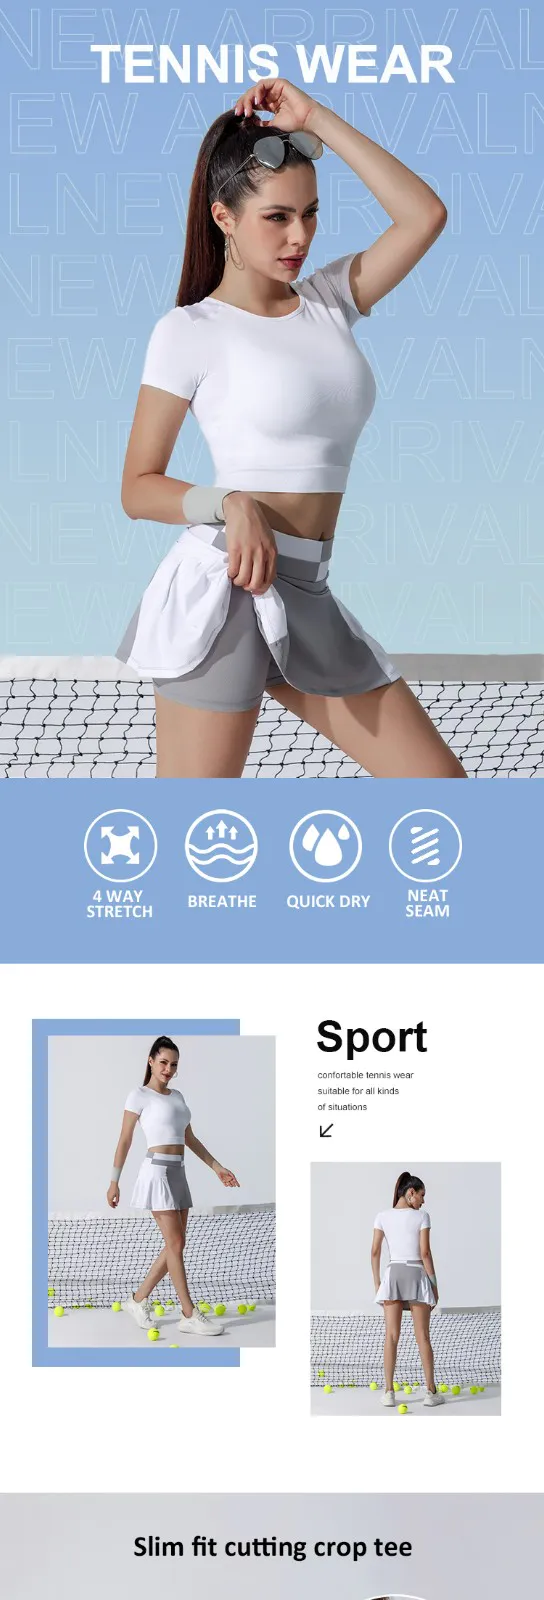 INGOR tennis women clothes supplier for women